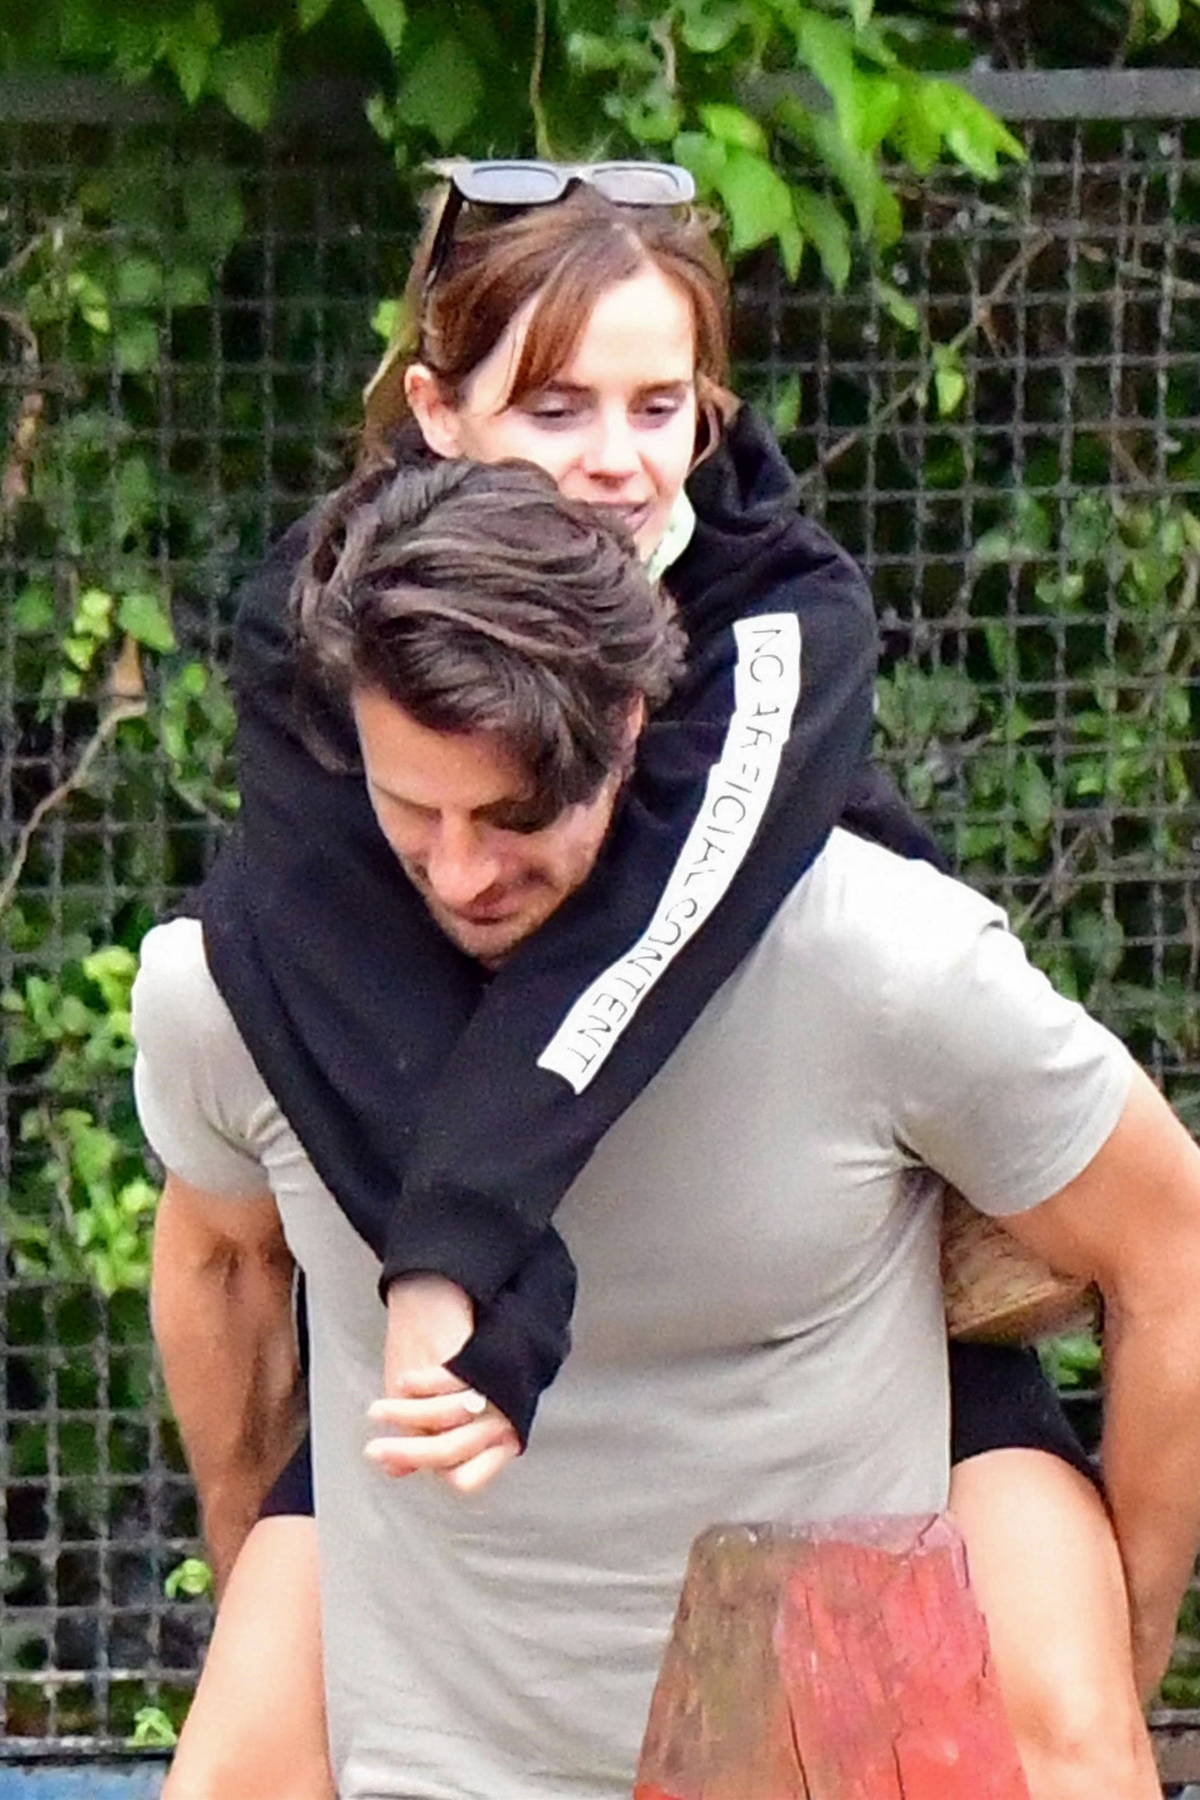 Emma Watson enjoys piggyback ride on Ryan Kohn while out in Venice Lido,  Italy